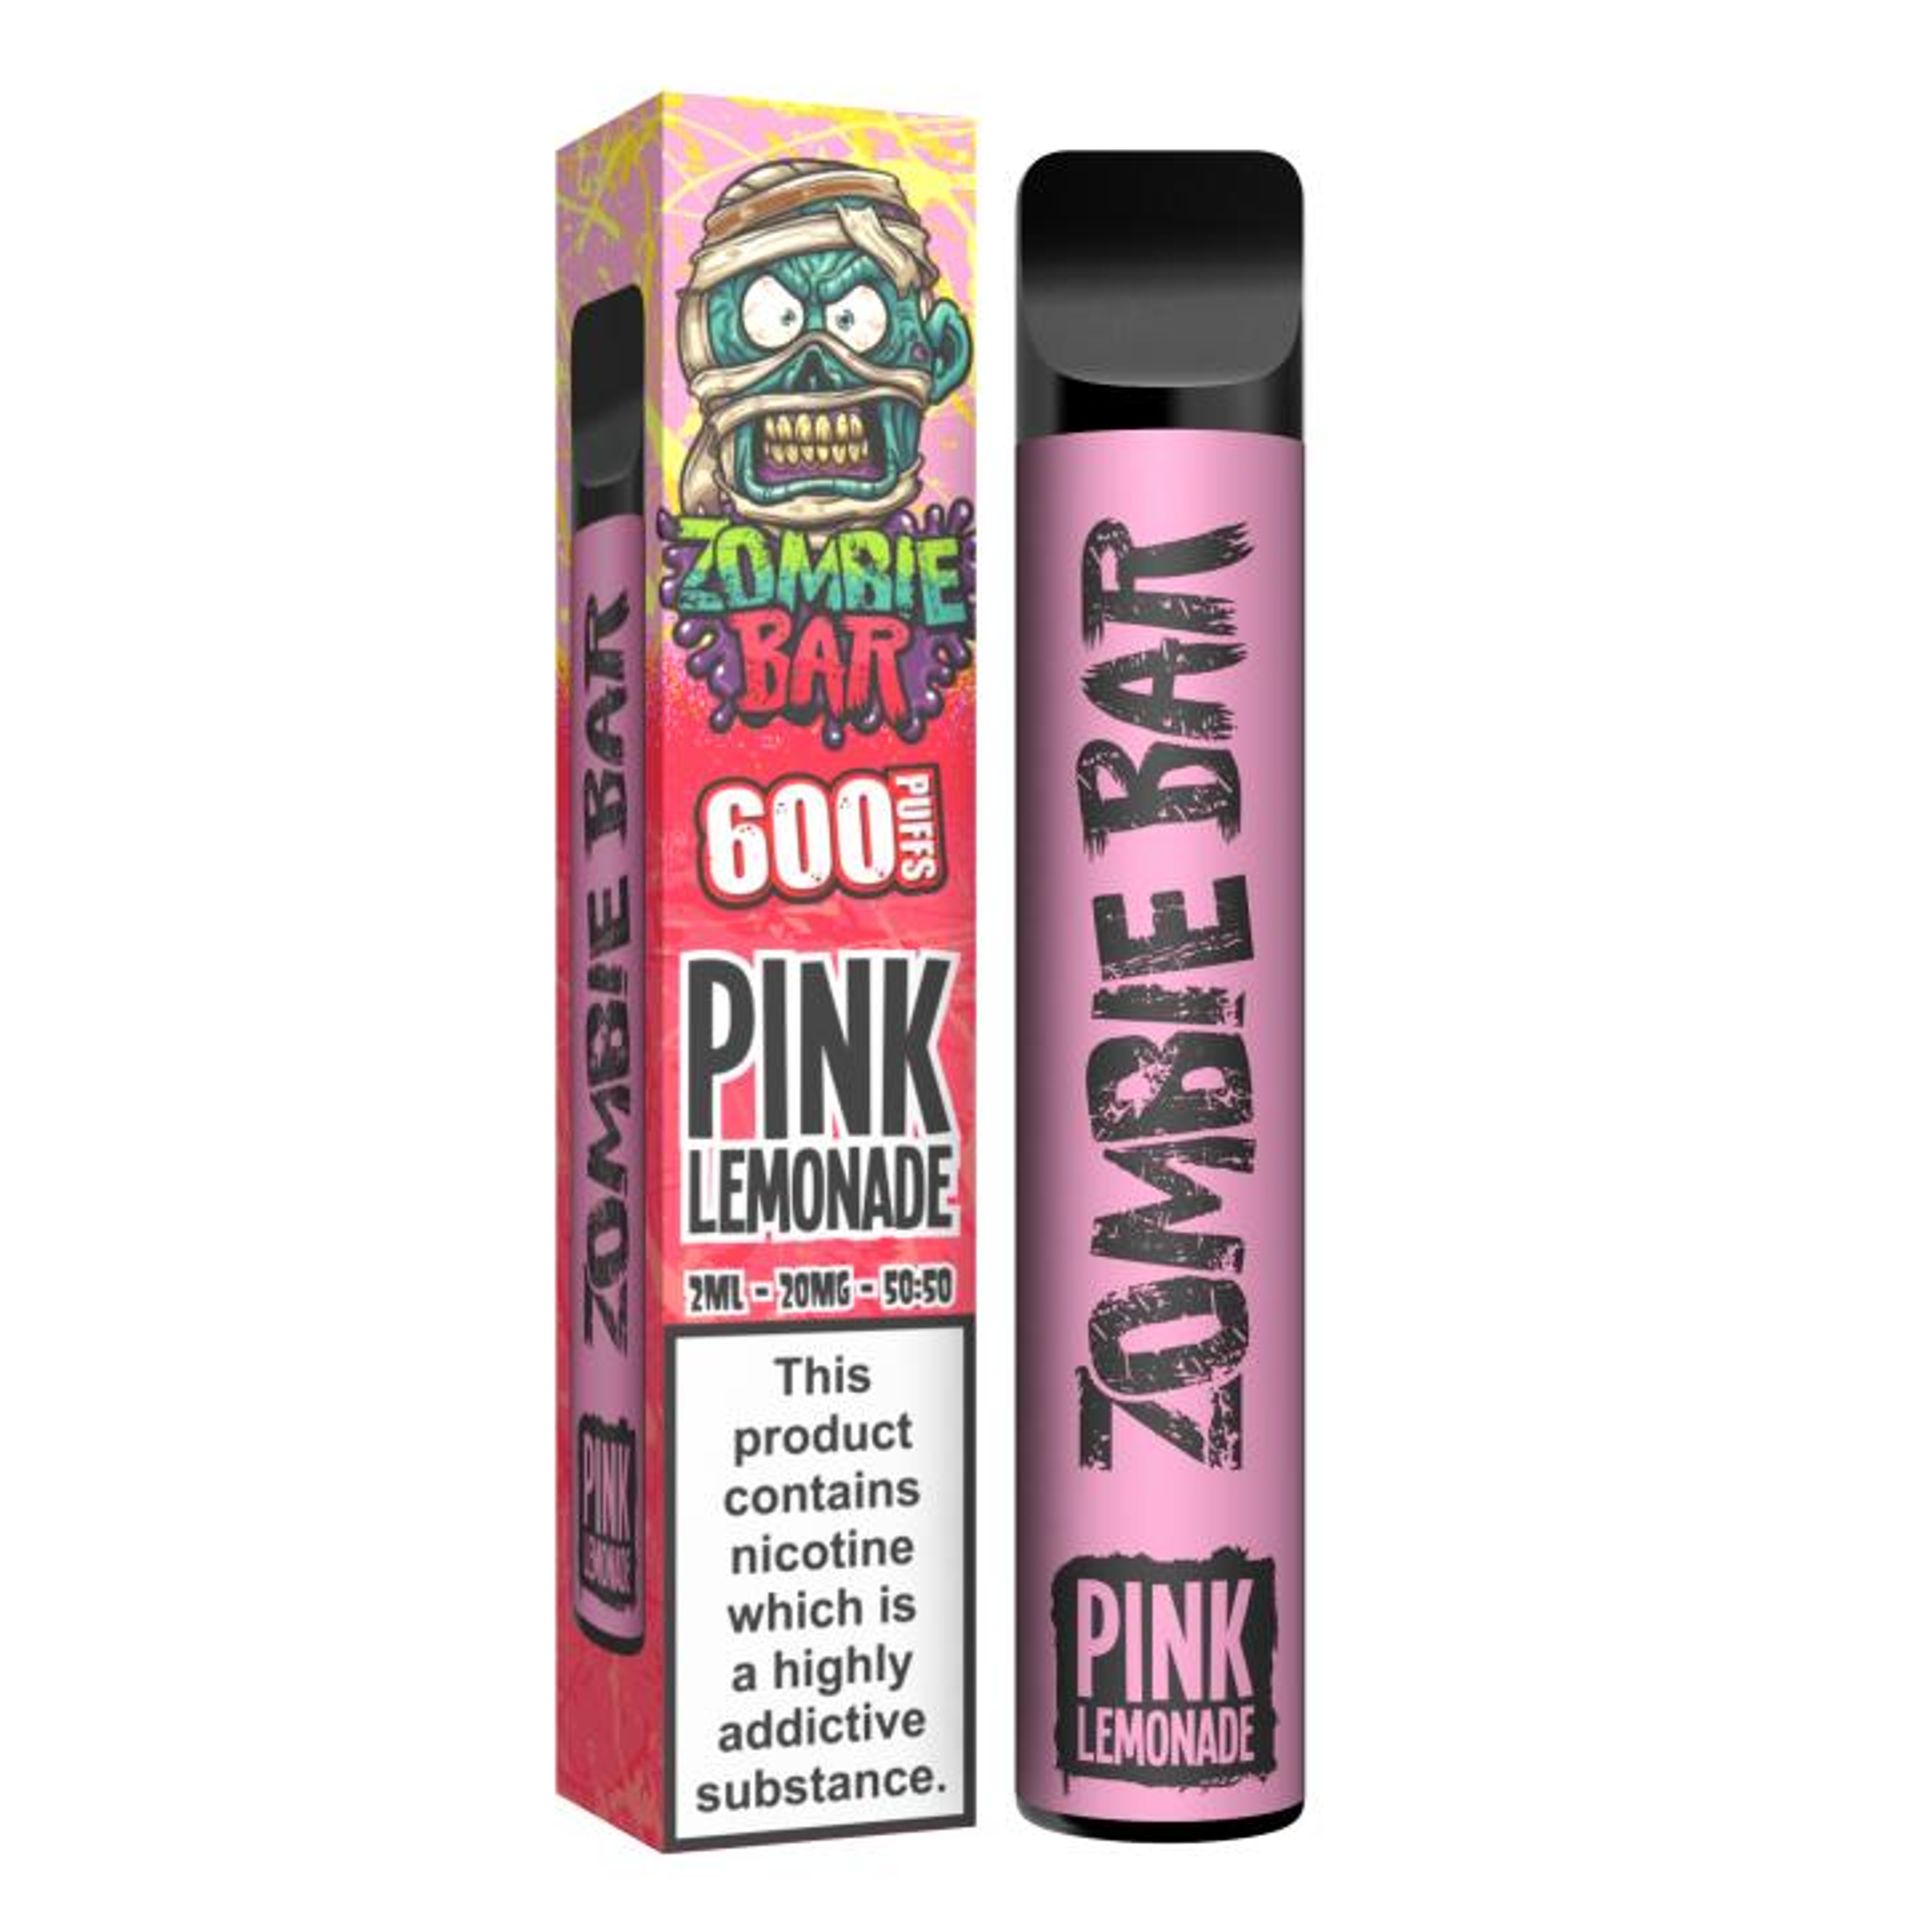 Image of Pink Lemonade by Zombie Bar